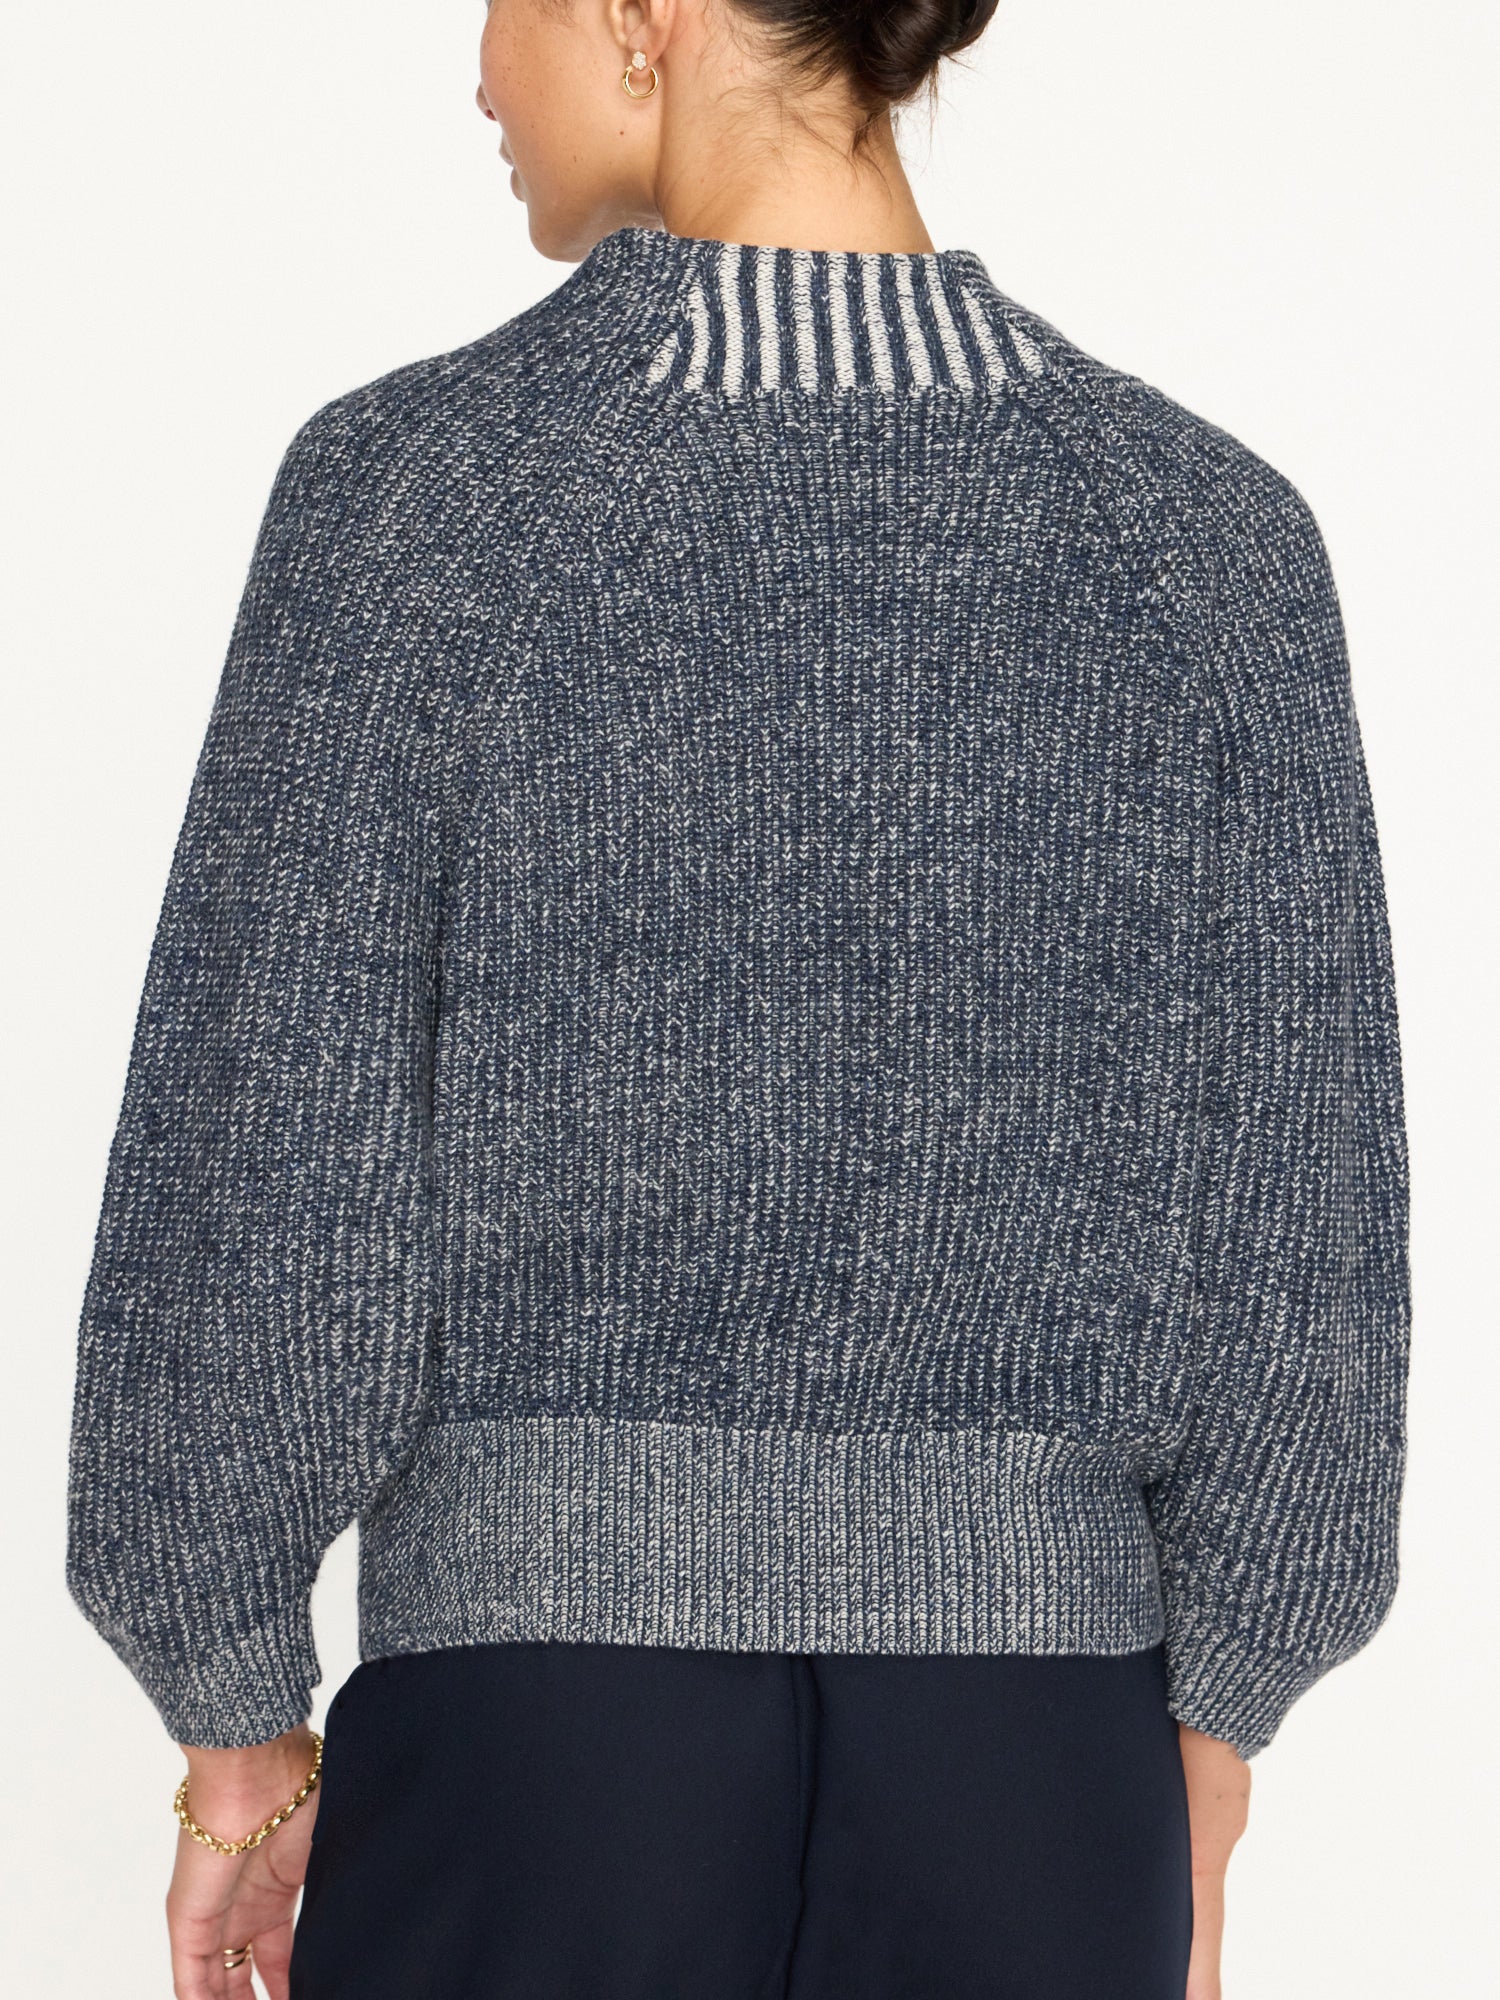 Leith indigo cowl neck sweater back view